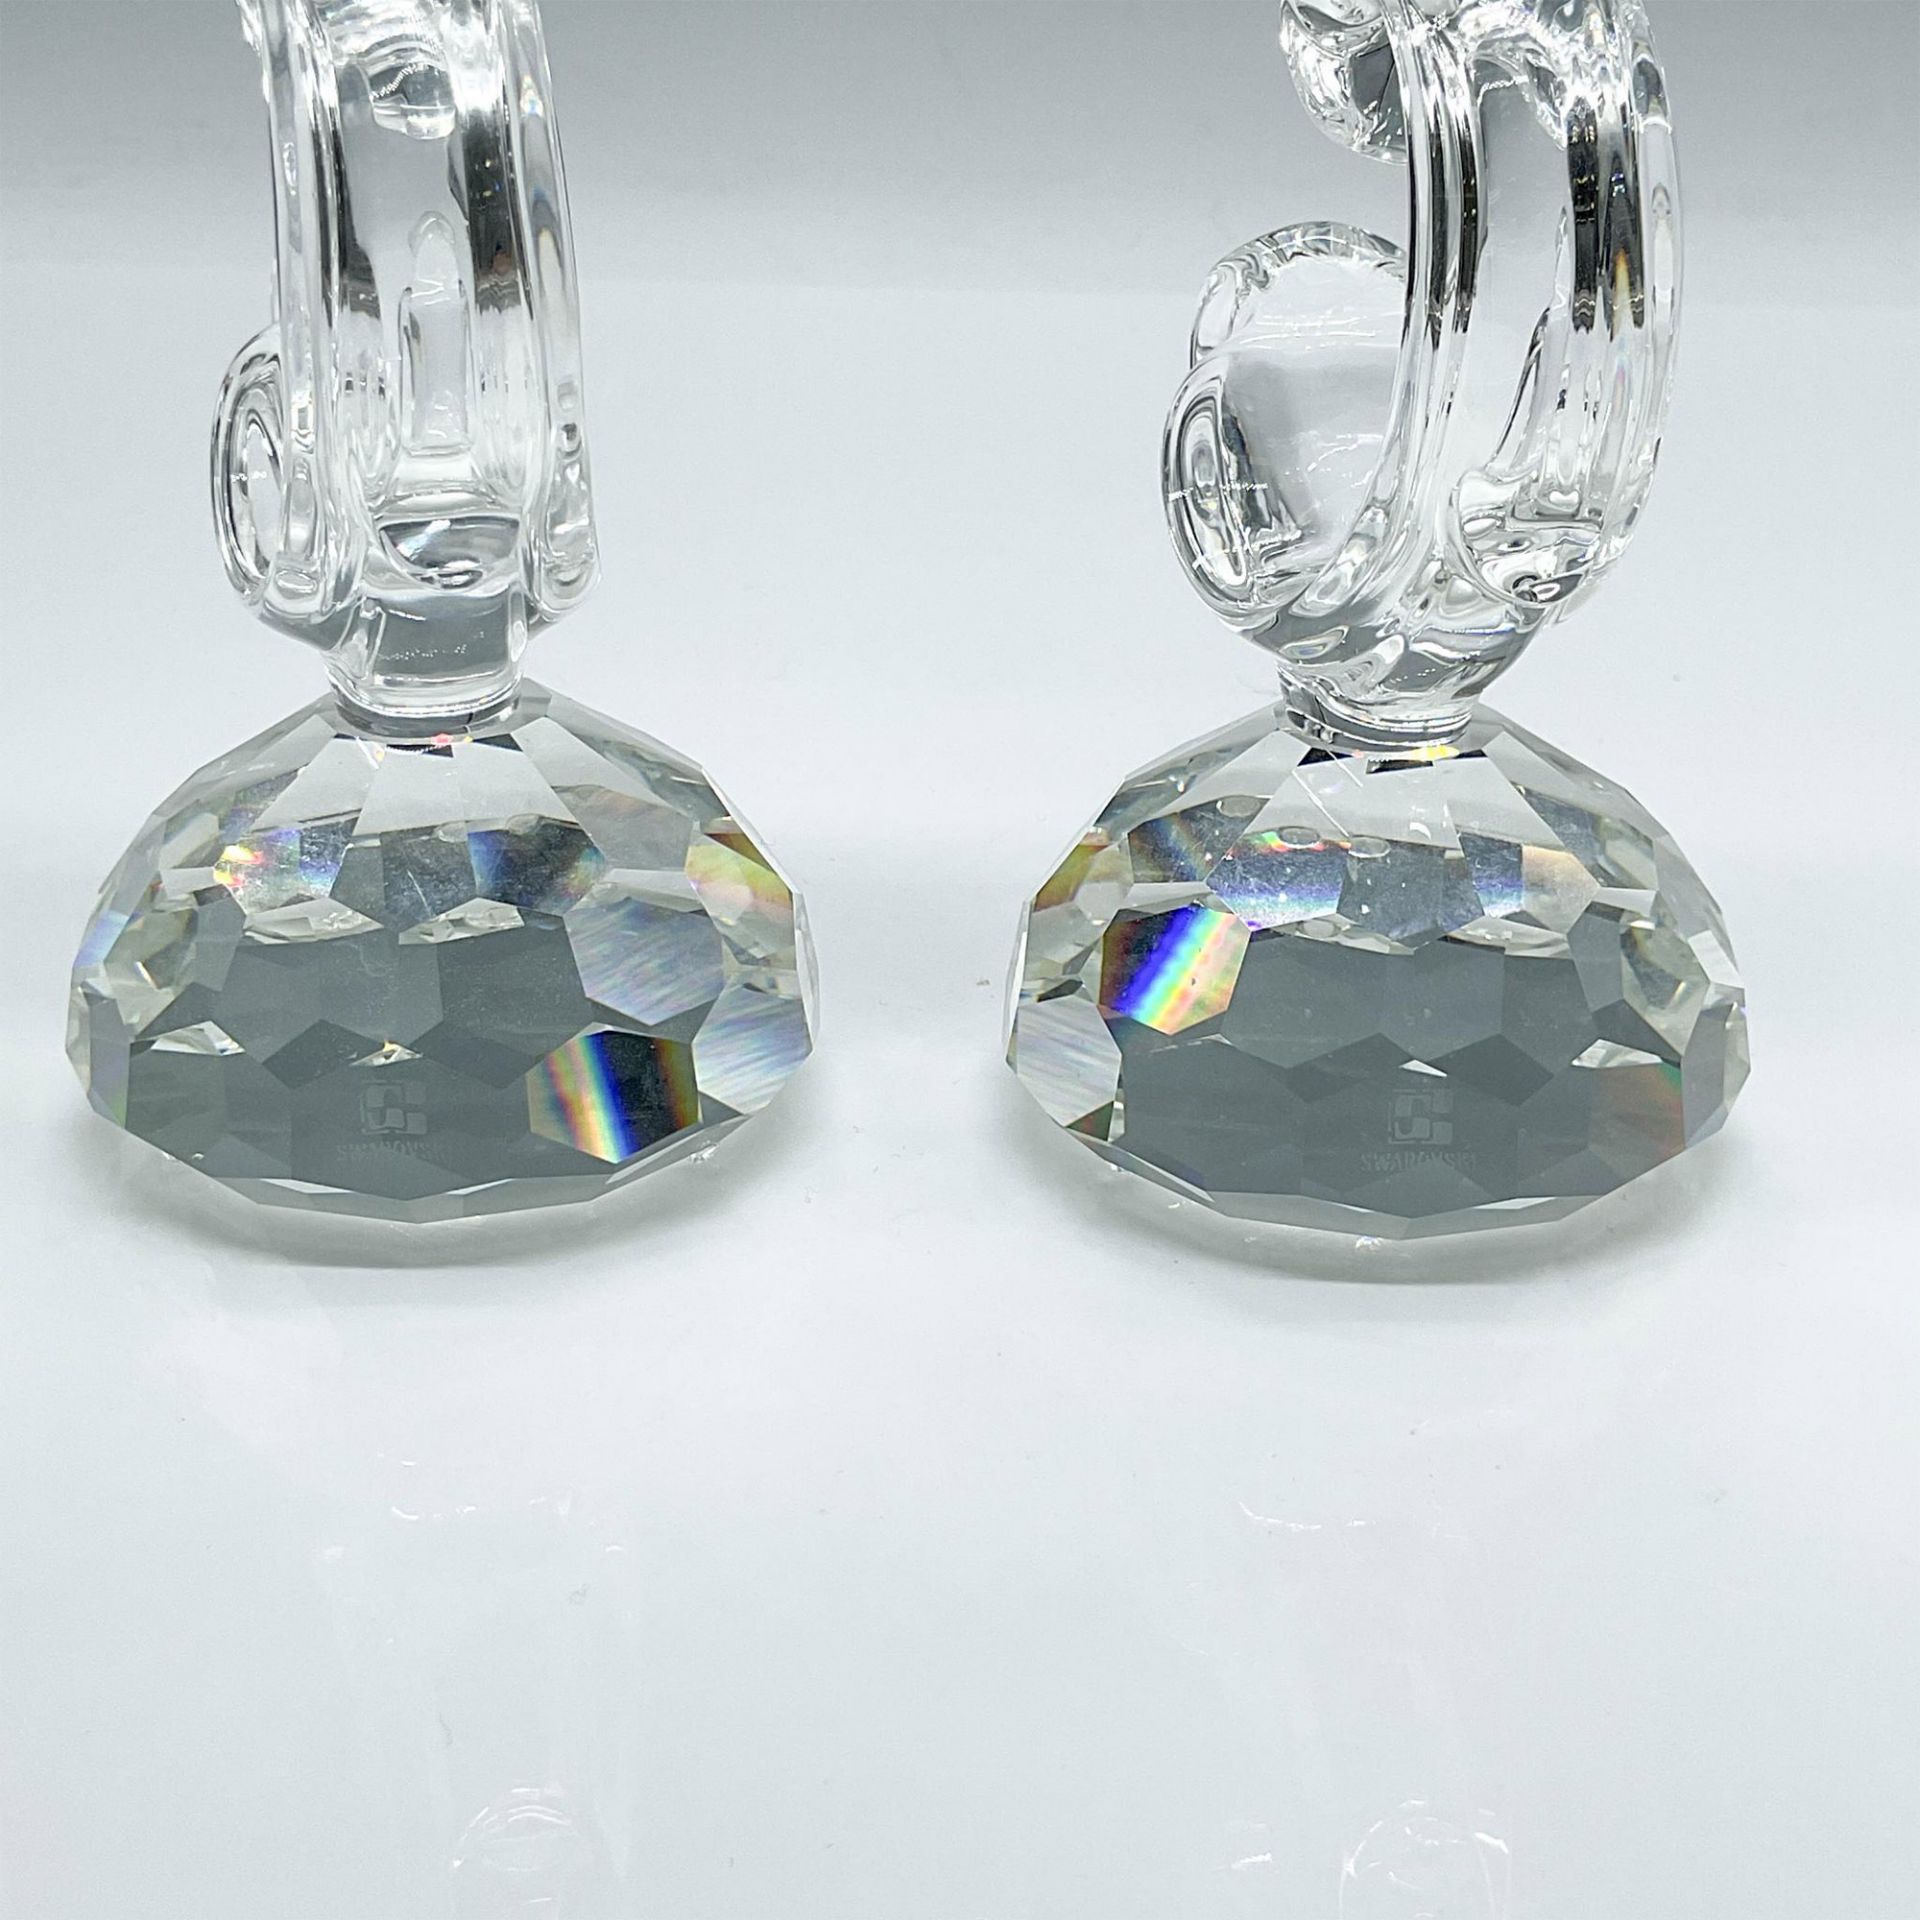 Pair of Swarovski Crystal Candlesticks - Image 4 of 4